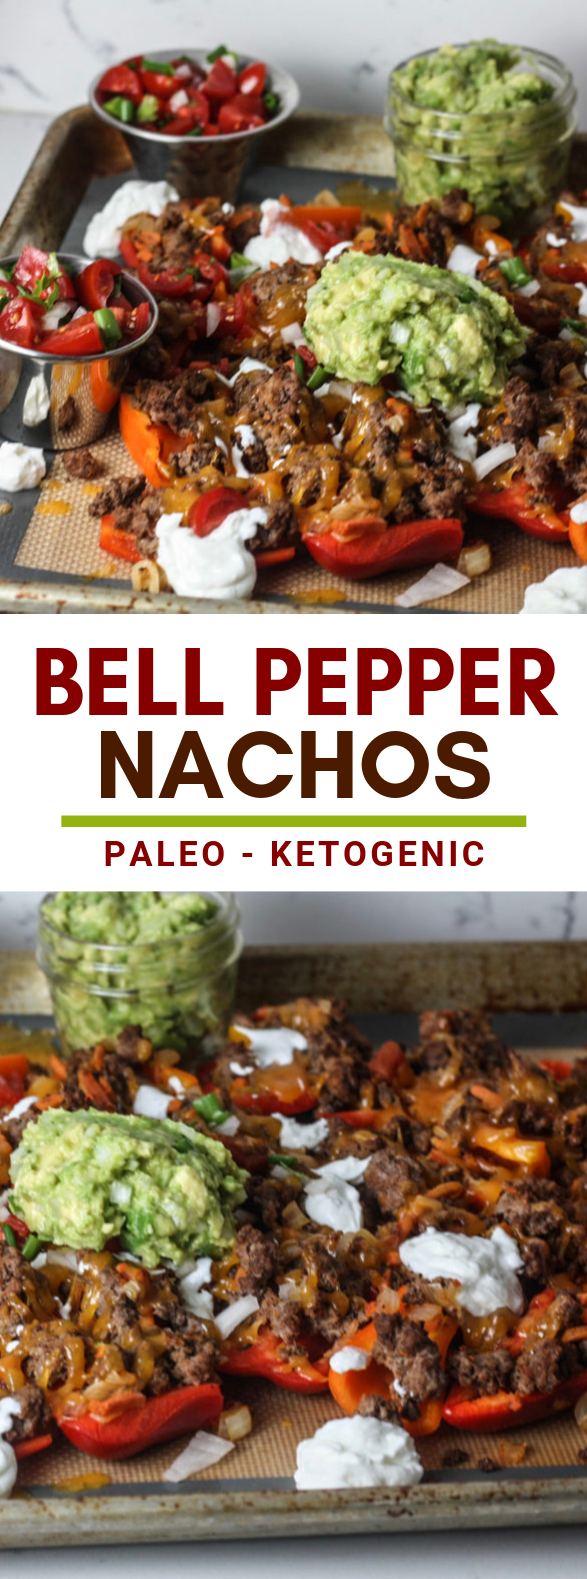 Bell Pepper Nachos #paleo #ketodiet